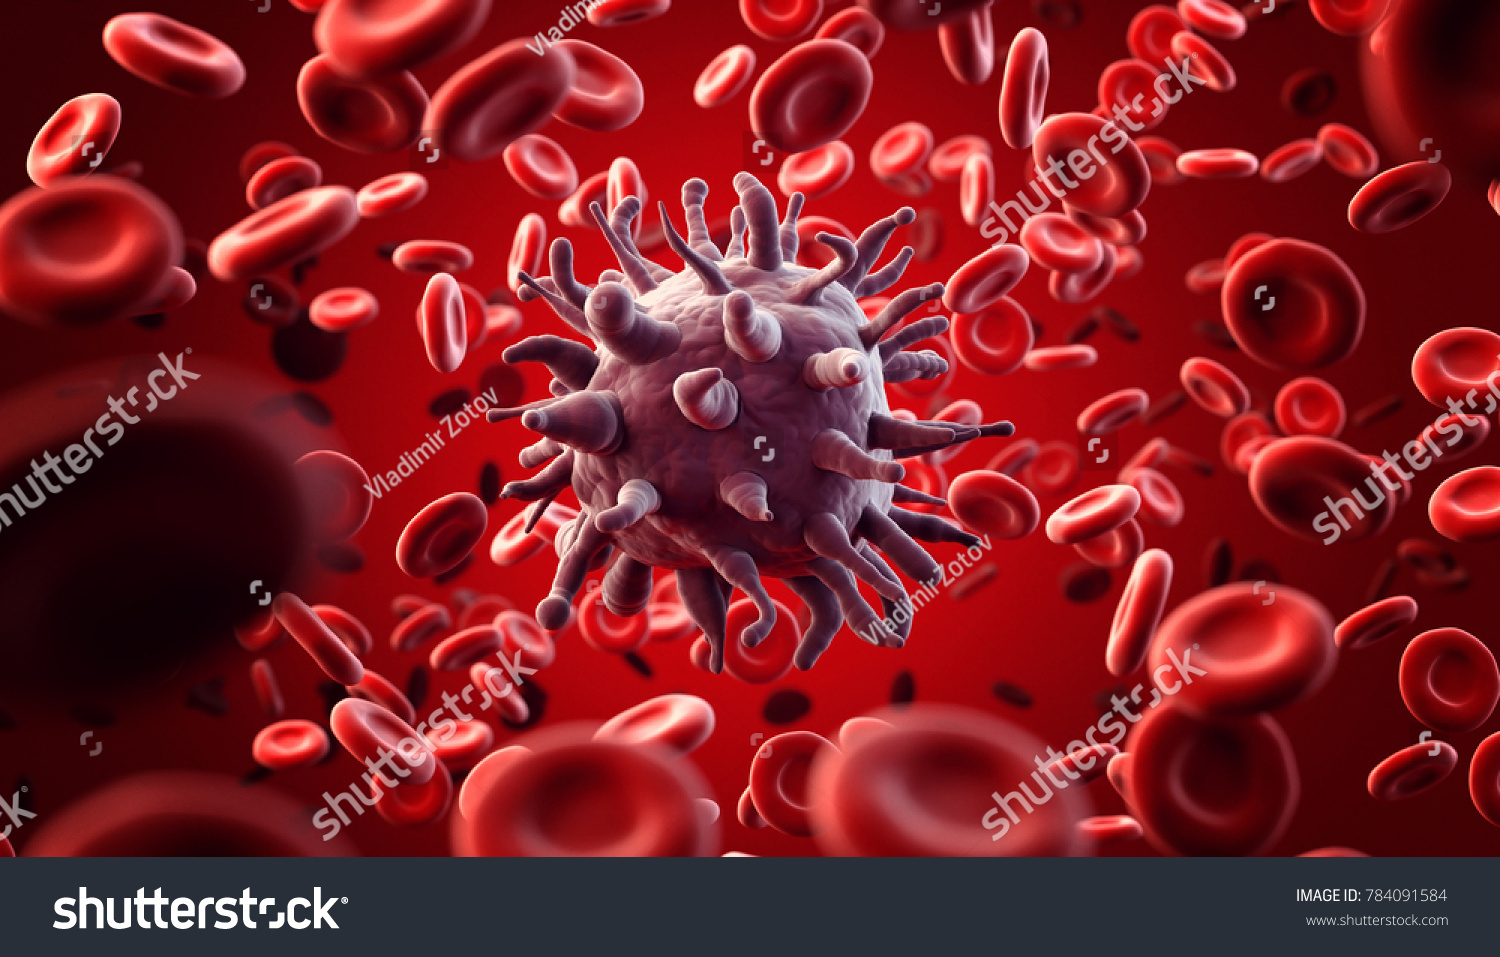 3D illustration of viruses in blood #784091584